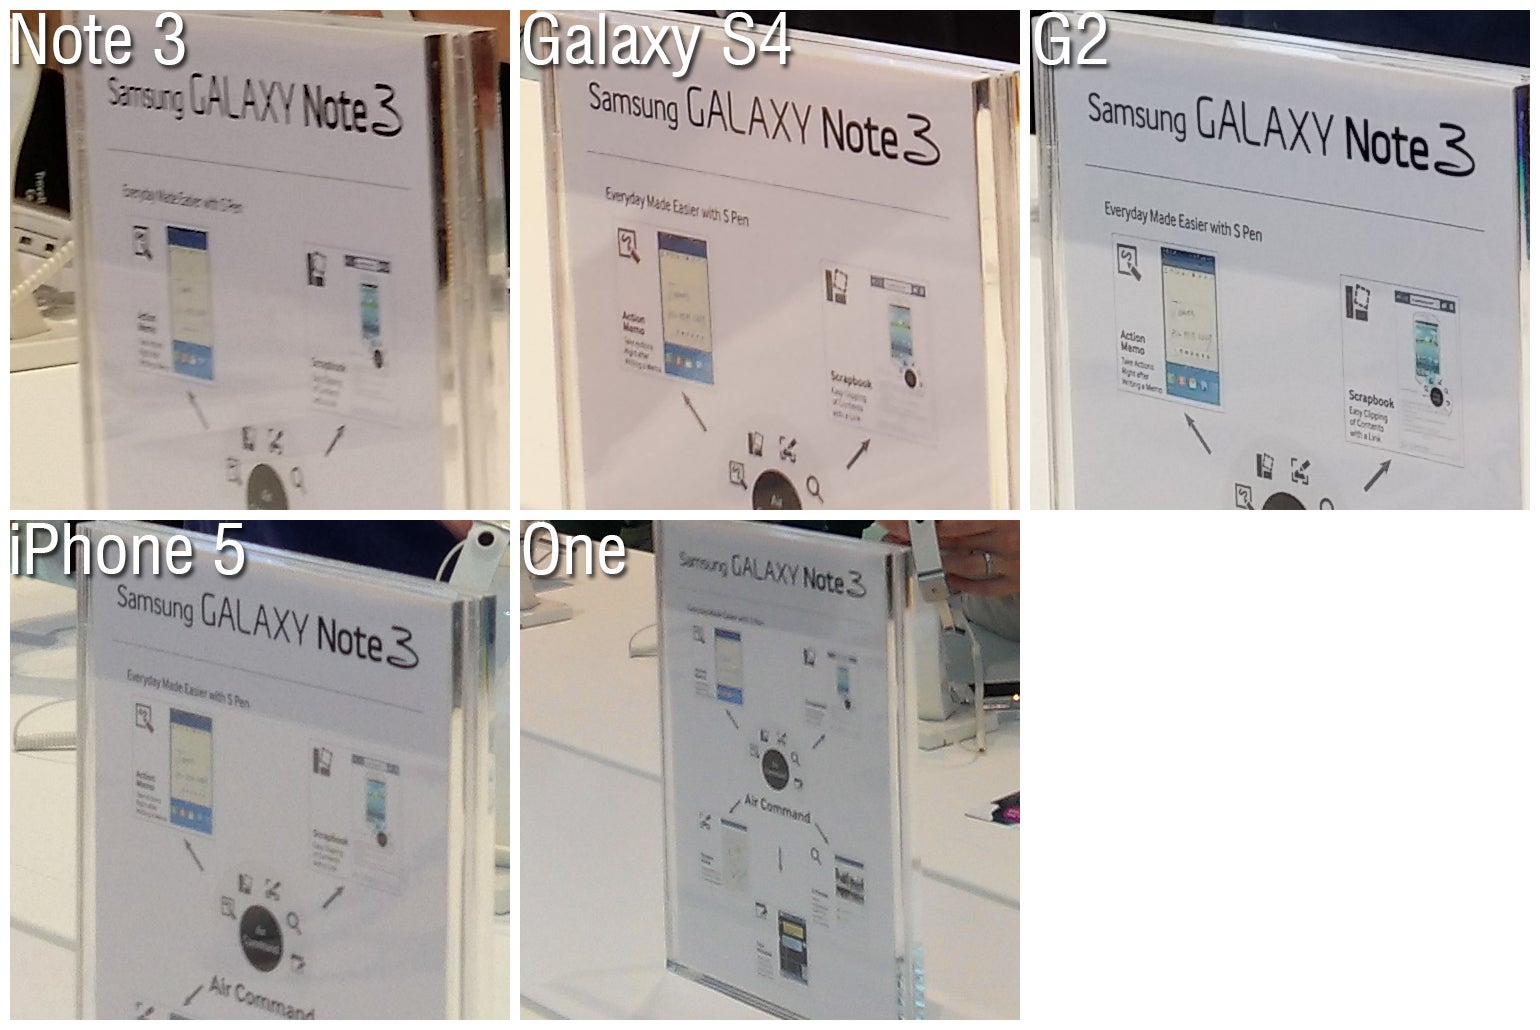 Camera shootout: Note 3 vs Galaxy S4 vs G2 vs iPhone 5 vs One